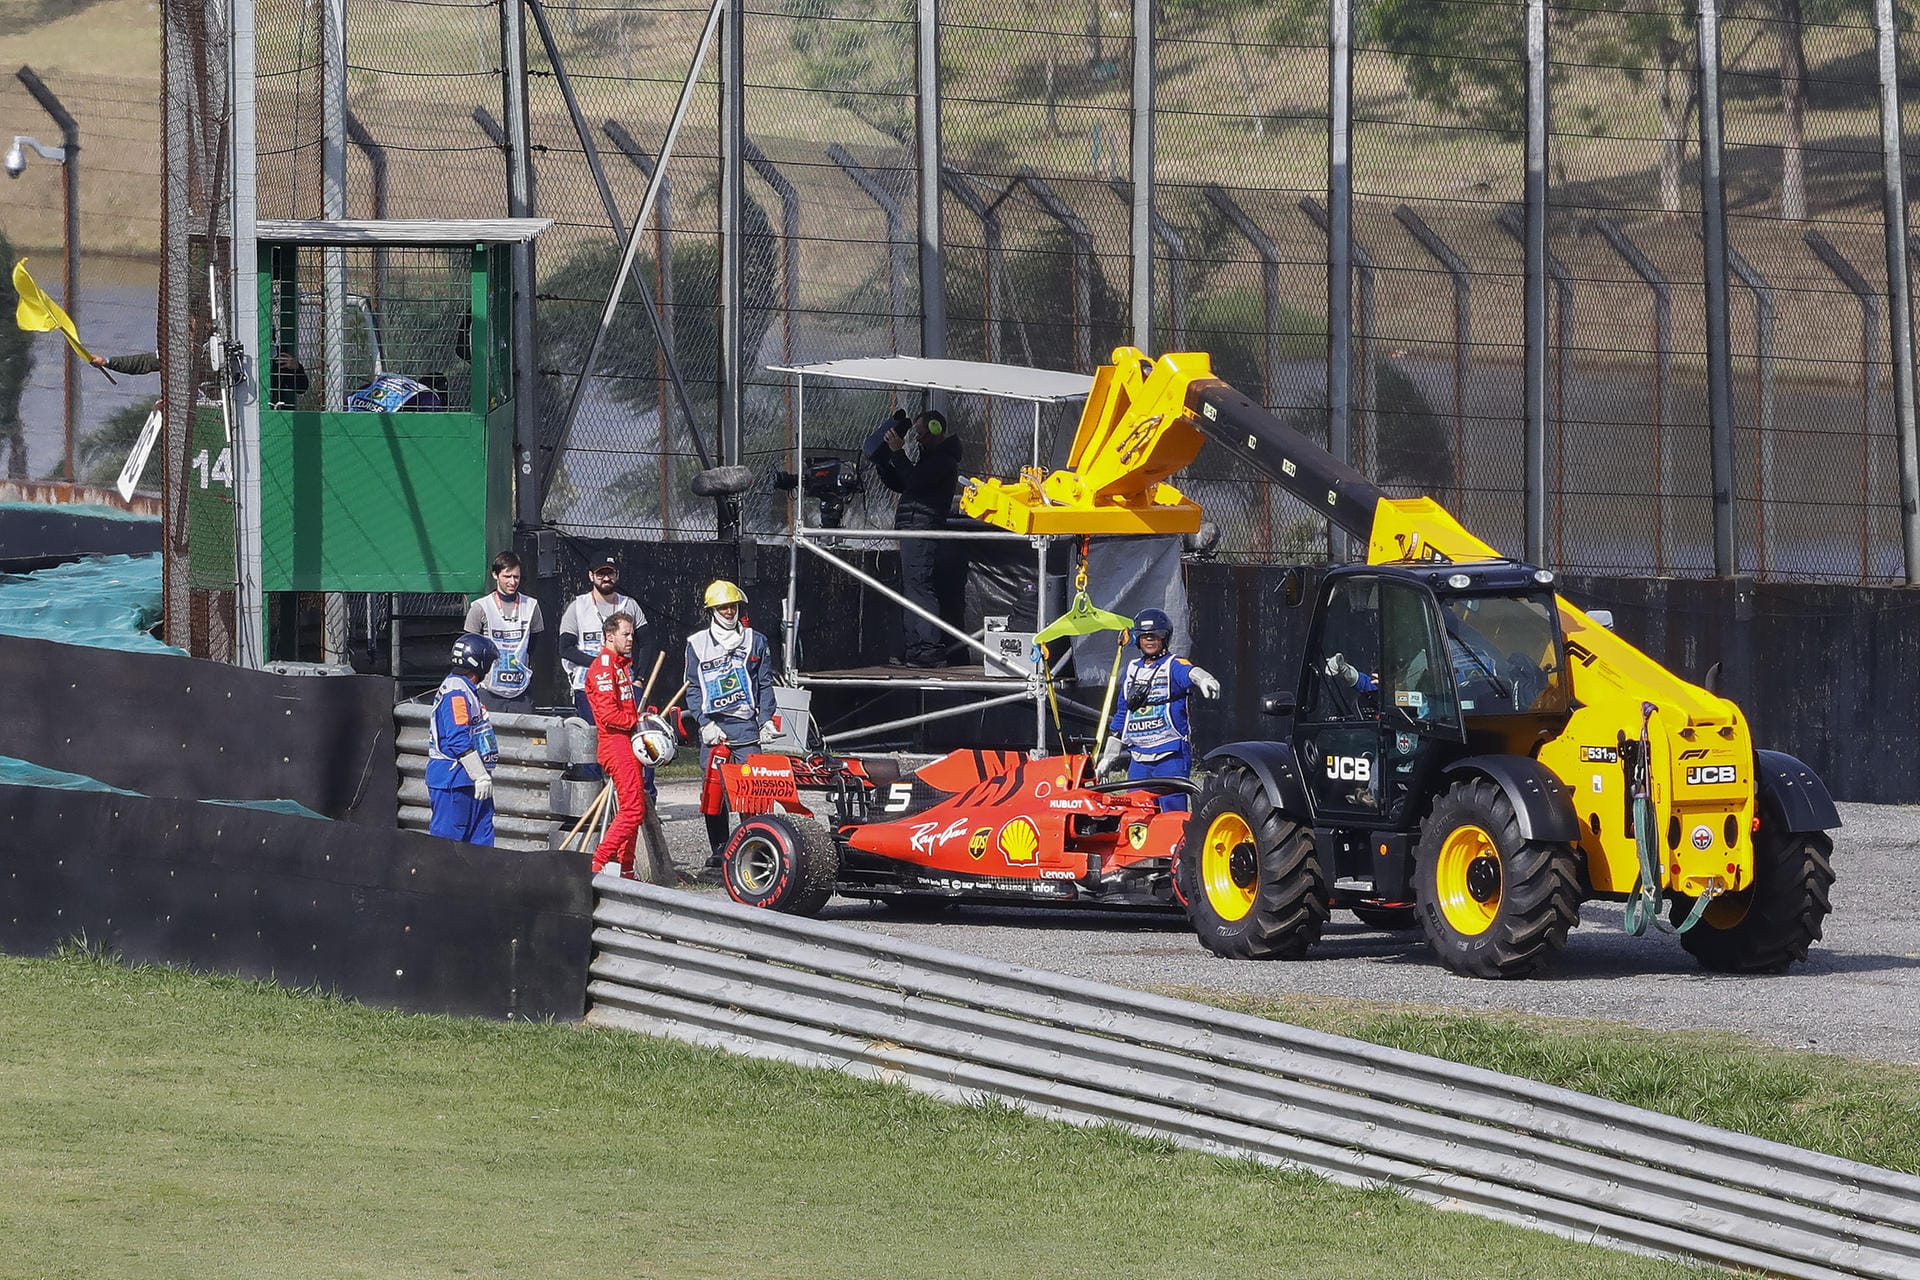 November 17, 2019, Sao Paulo, SP, Brazil: SEBASTIAN VETTEL of the Scuderia Ferrari after crash into his teammate Charles